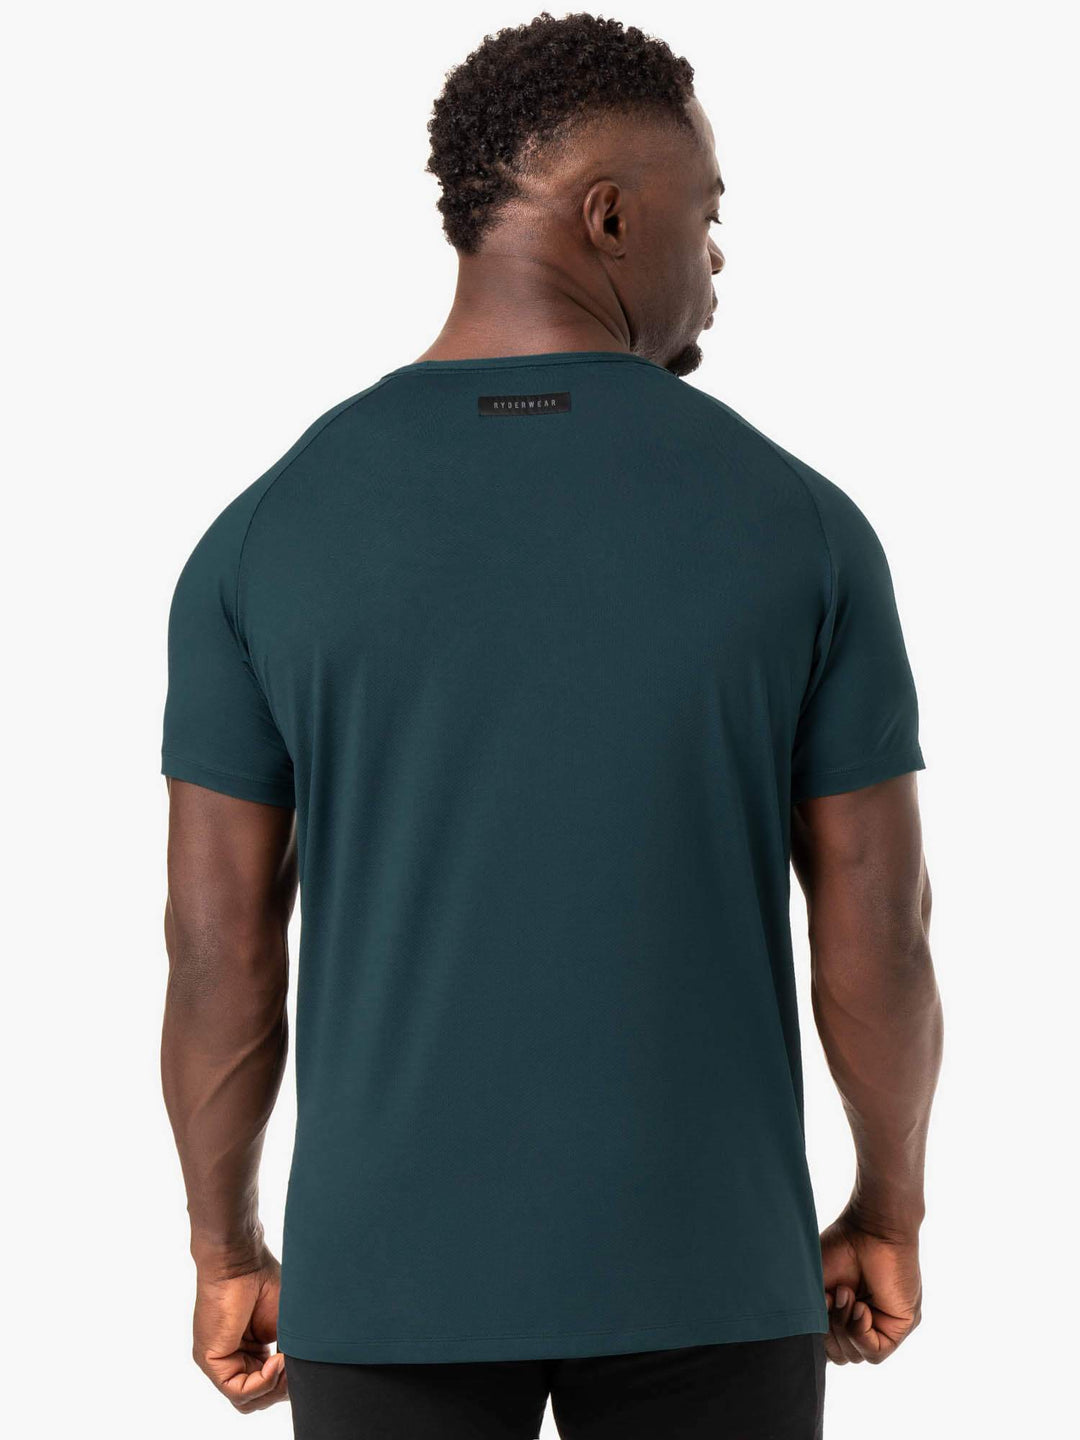 Endurance T-Shirt - Forest Green Clothing Ryderwear 